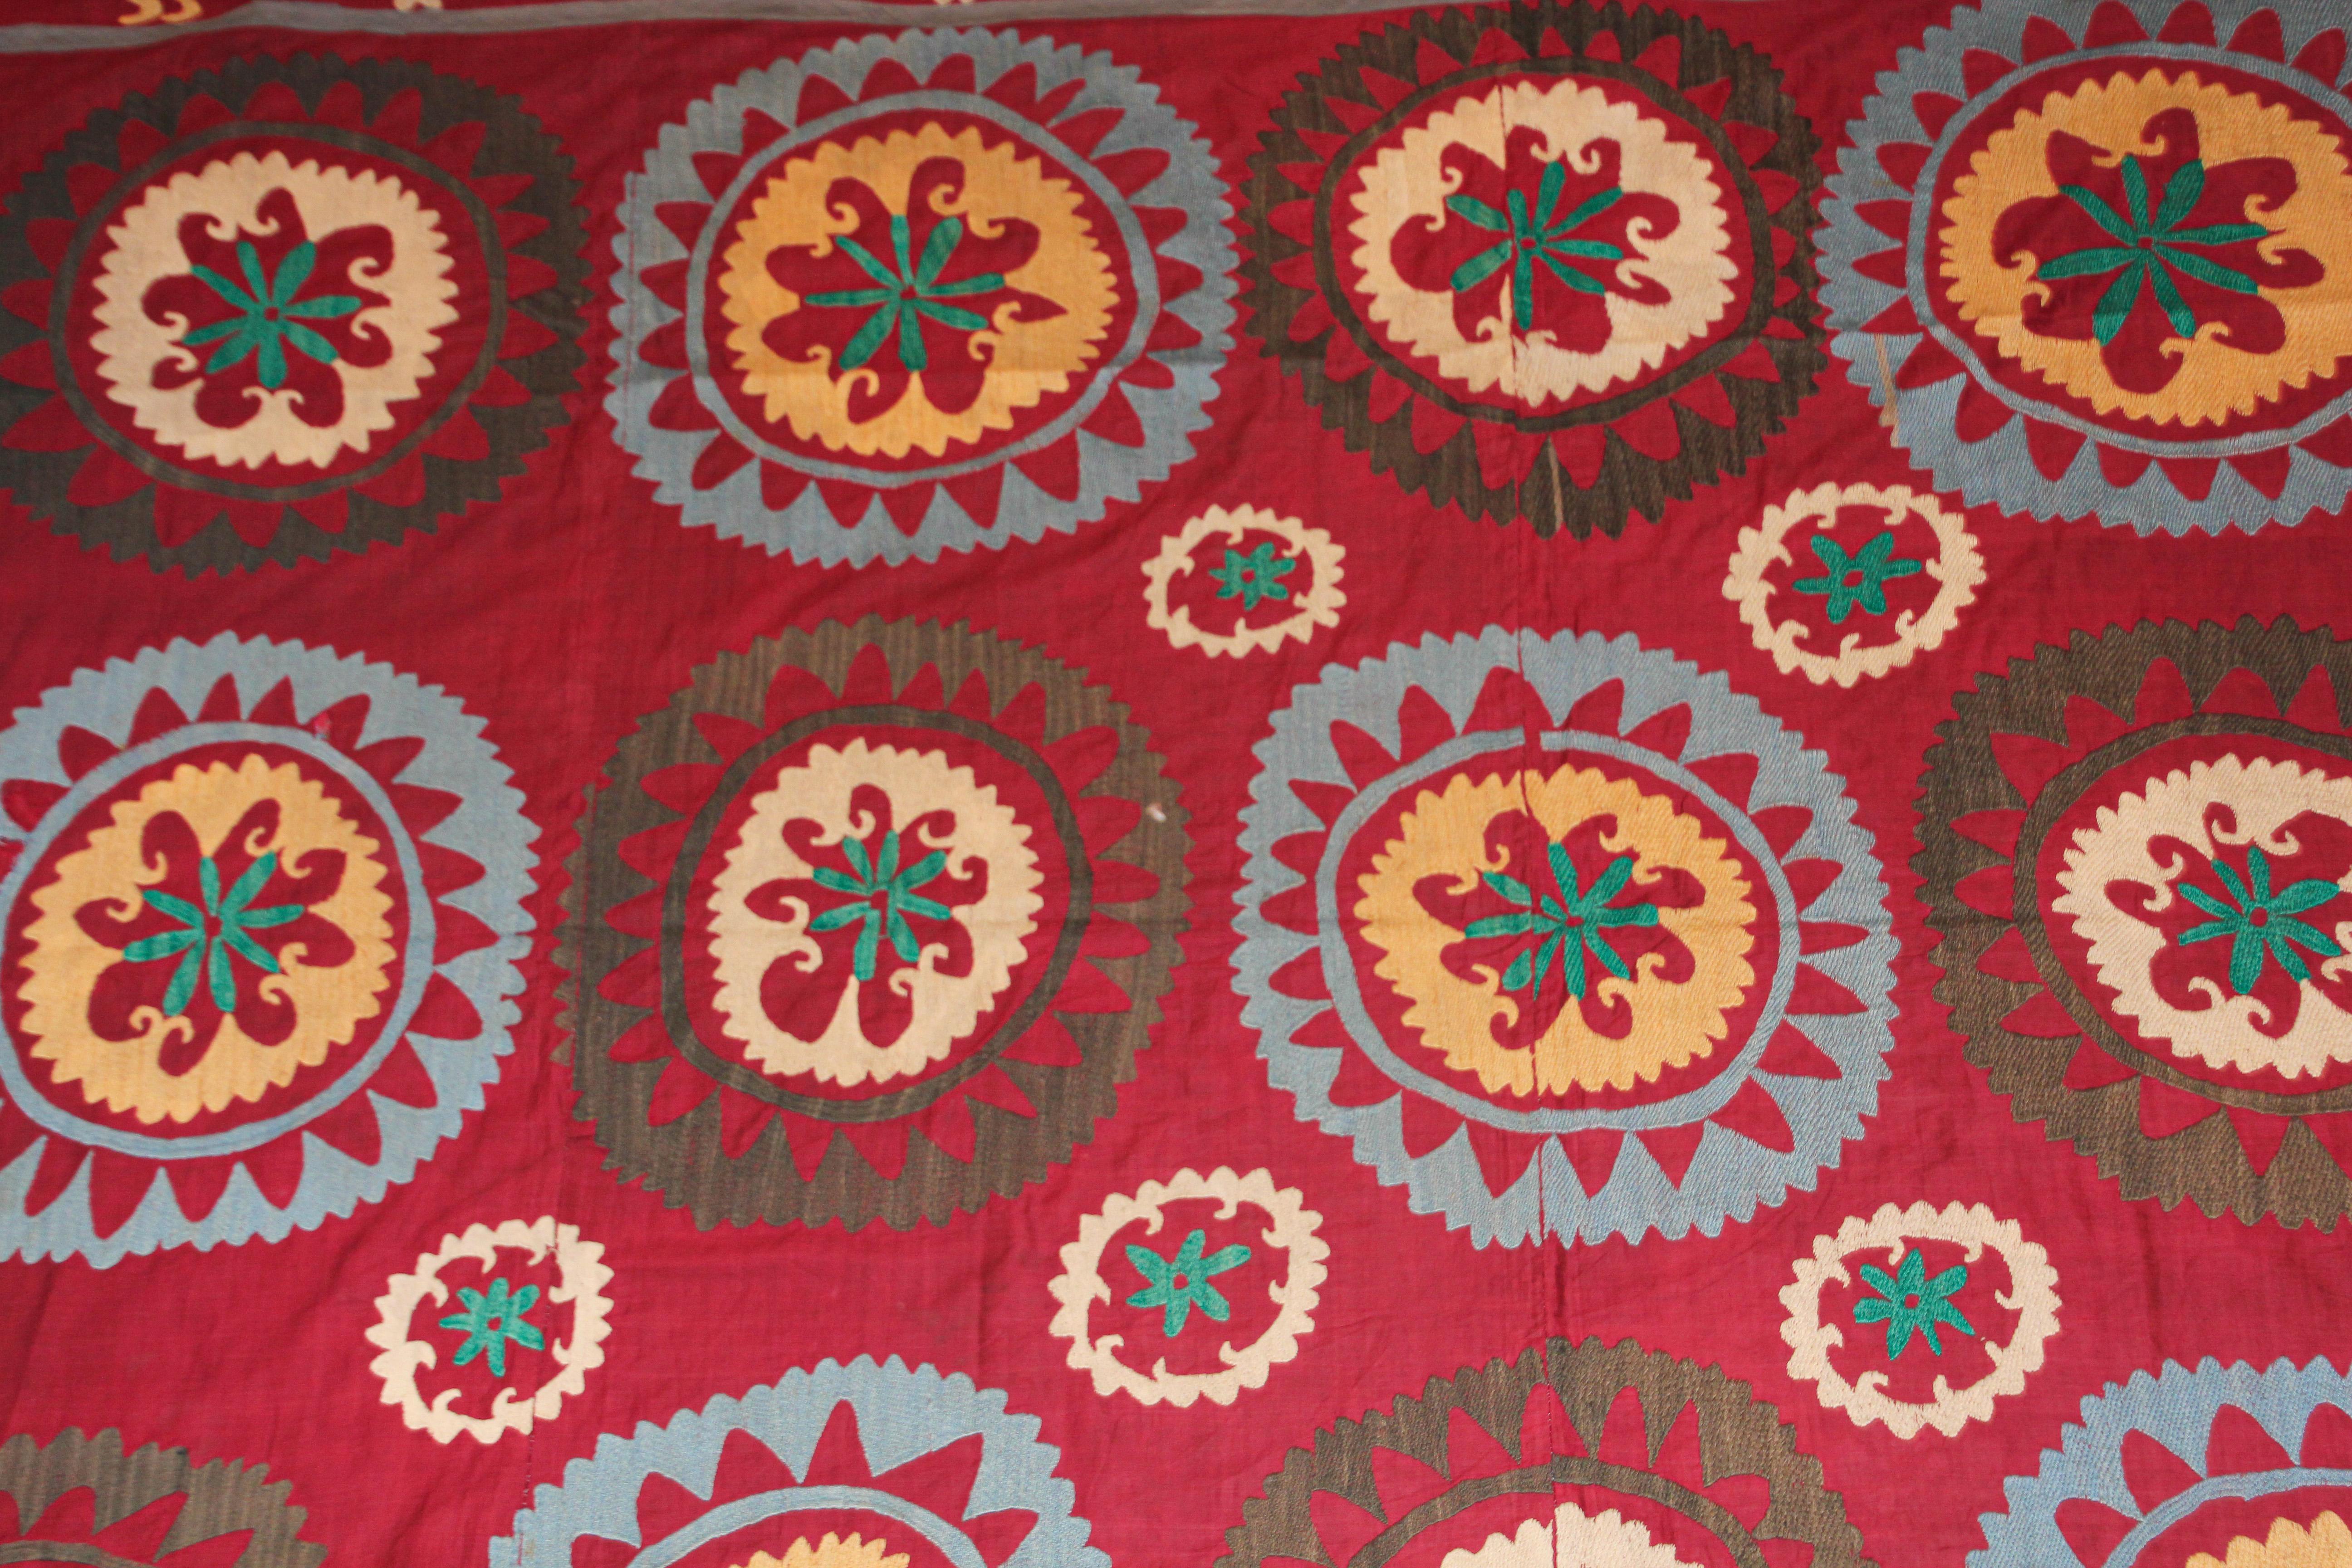 Brown Vintage Uzbek Suzani Needlework Textile Blanket or Tapestry